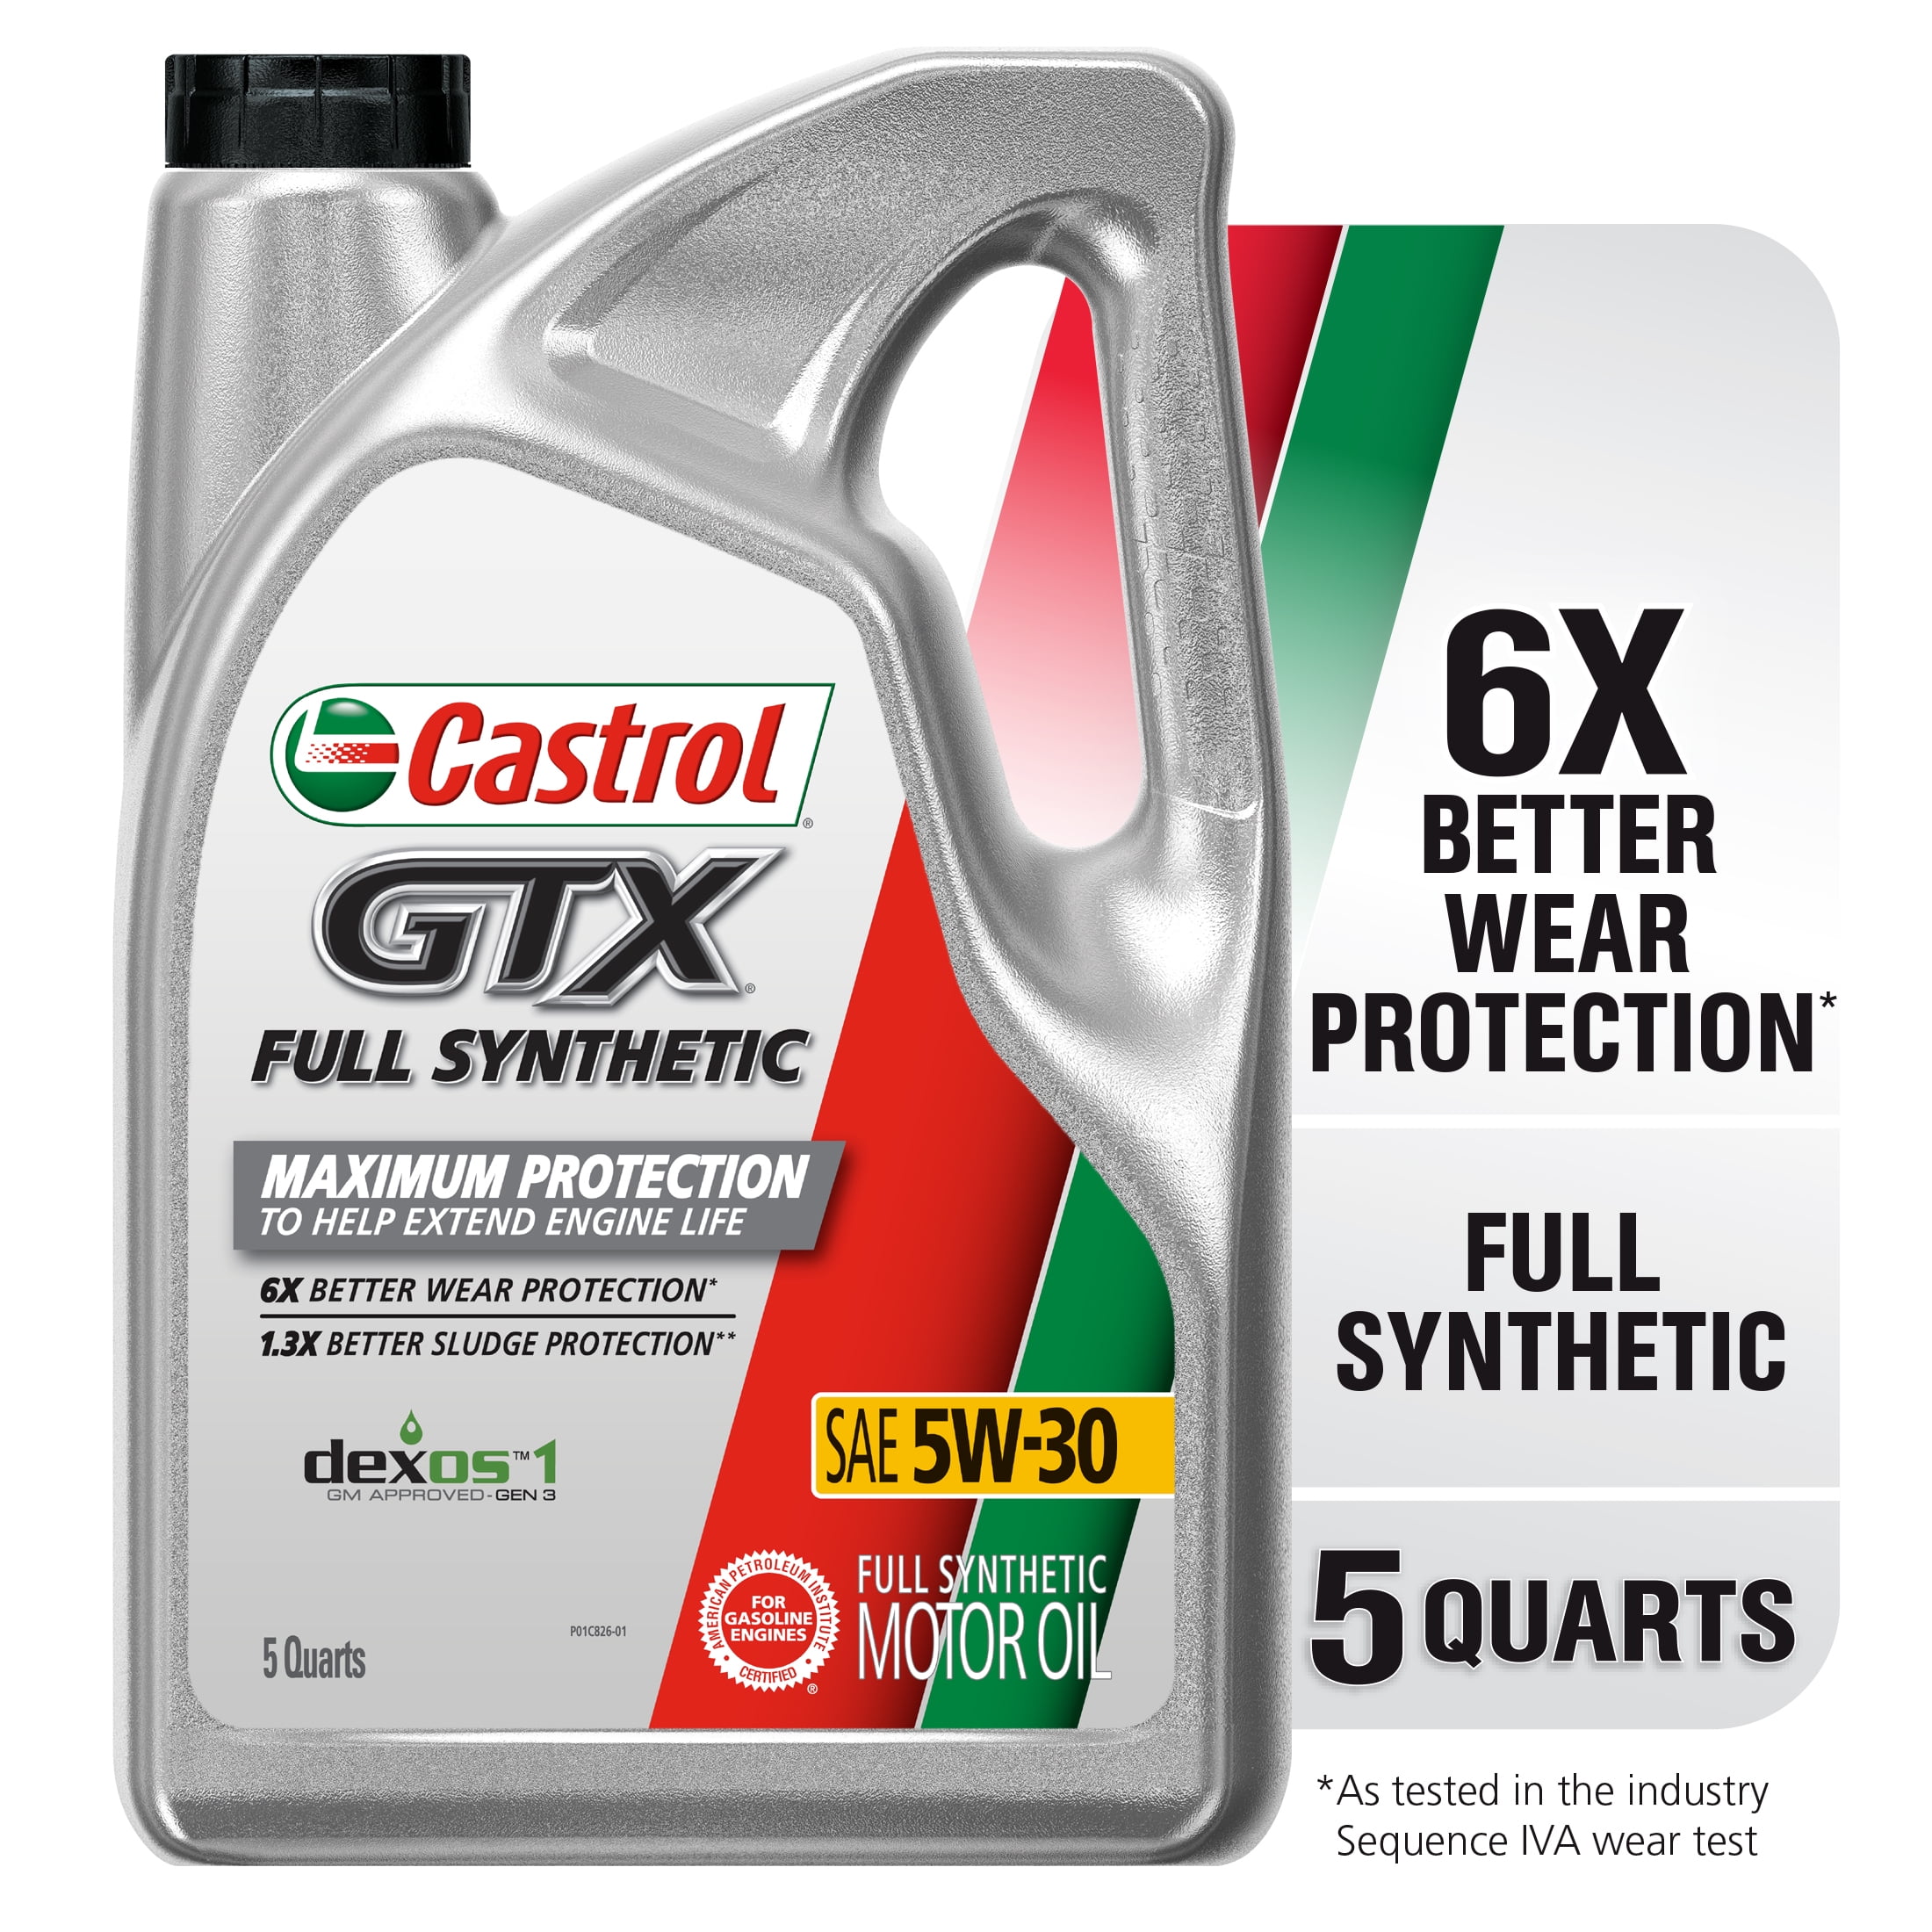 castrol-gtx-full-synthetic-5w-30-motor-oil-5-quarts-walmart